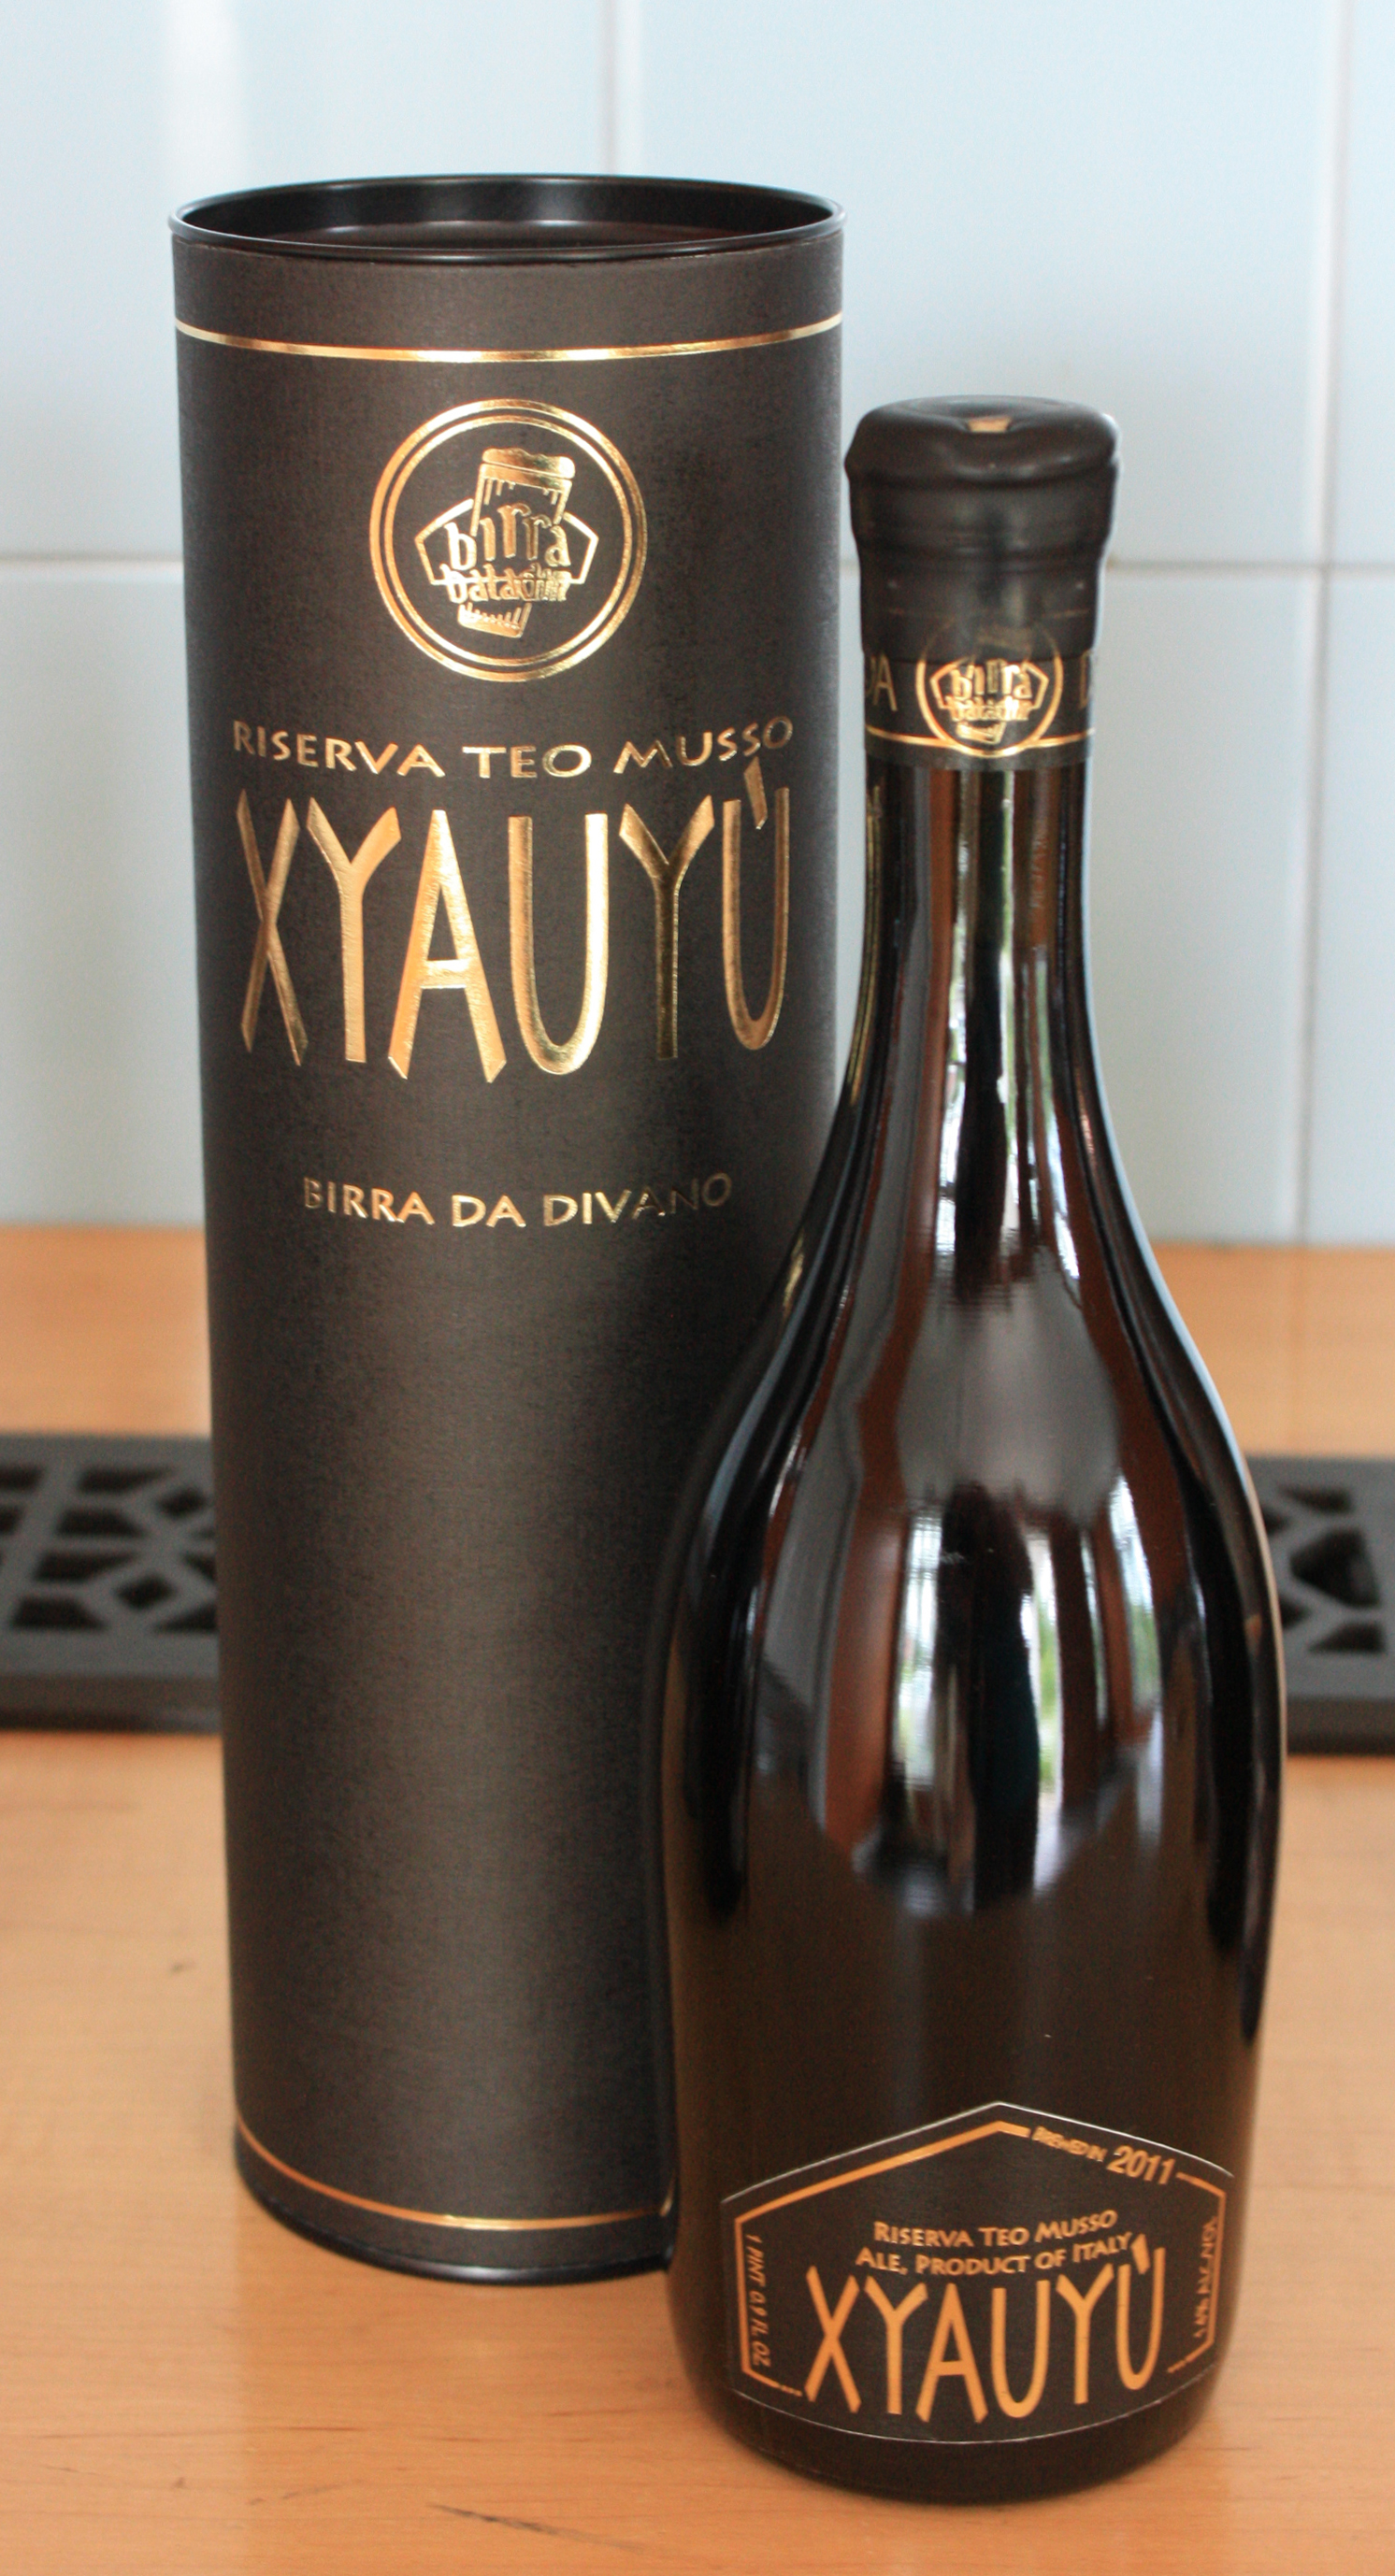 Xyauyu "Gold Edition" 16.9oz. bottle.